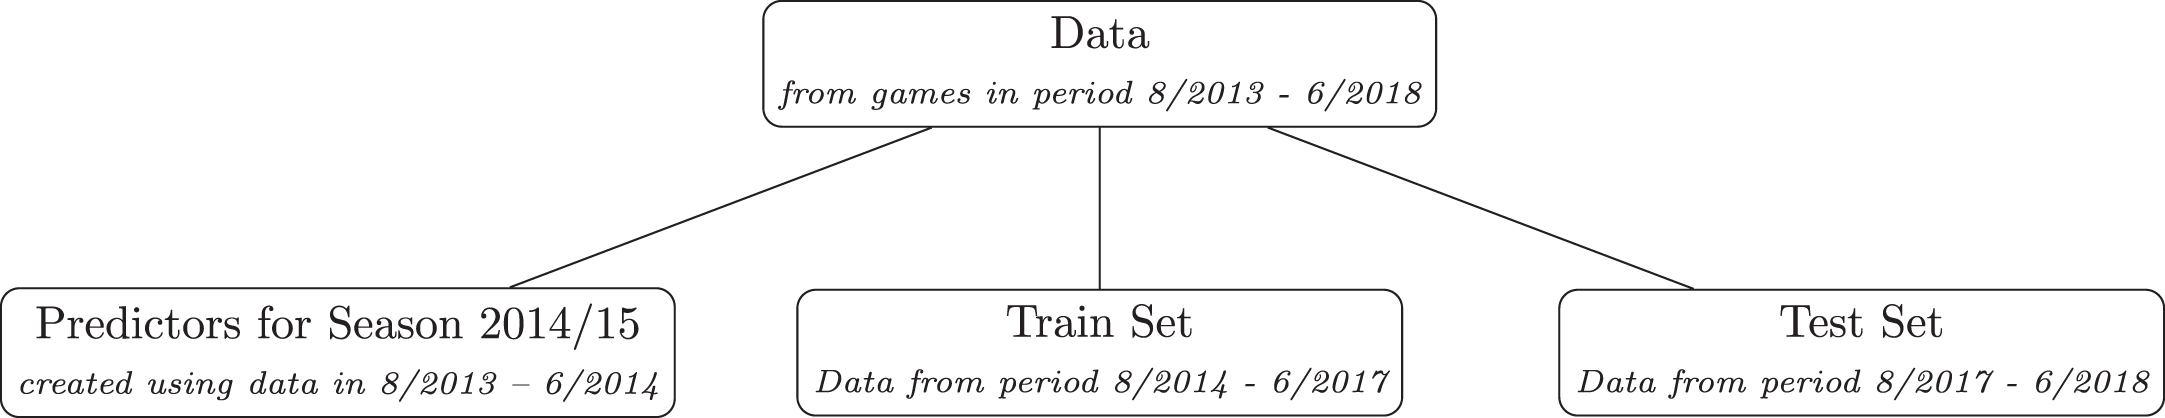 Data-set splitting hierarchy according to their usage.